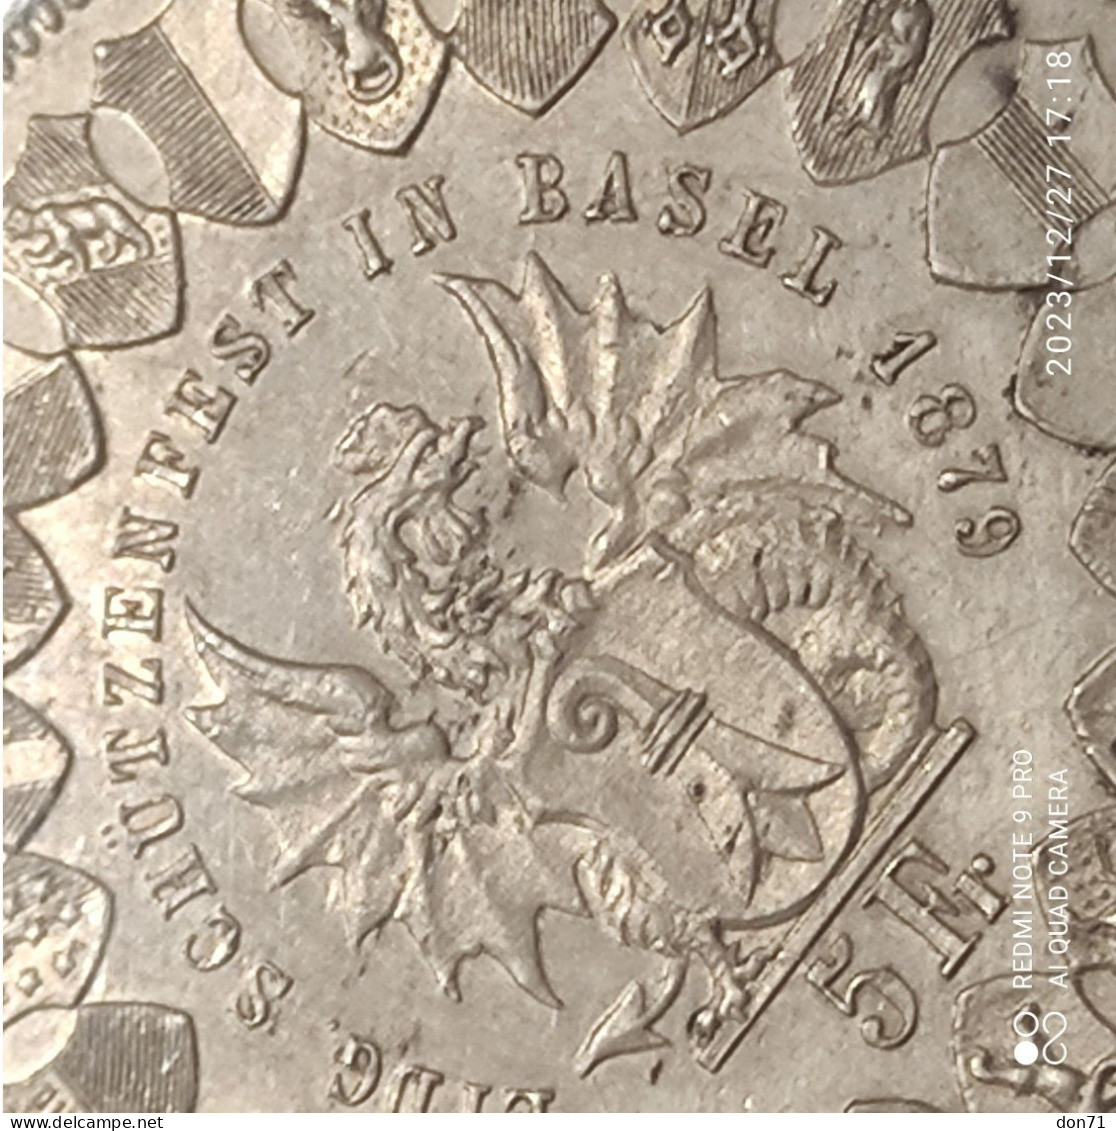 Basilea - 5 franchi 1879 (qFDC/FDC)